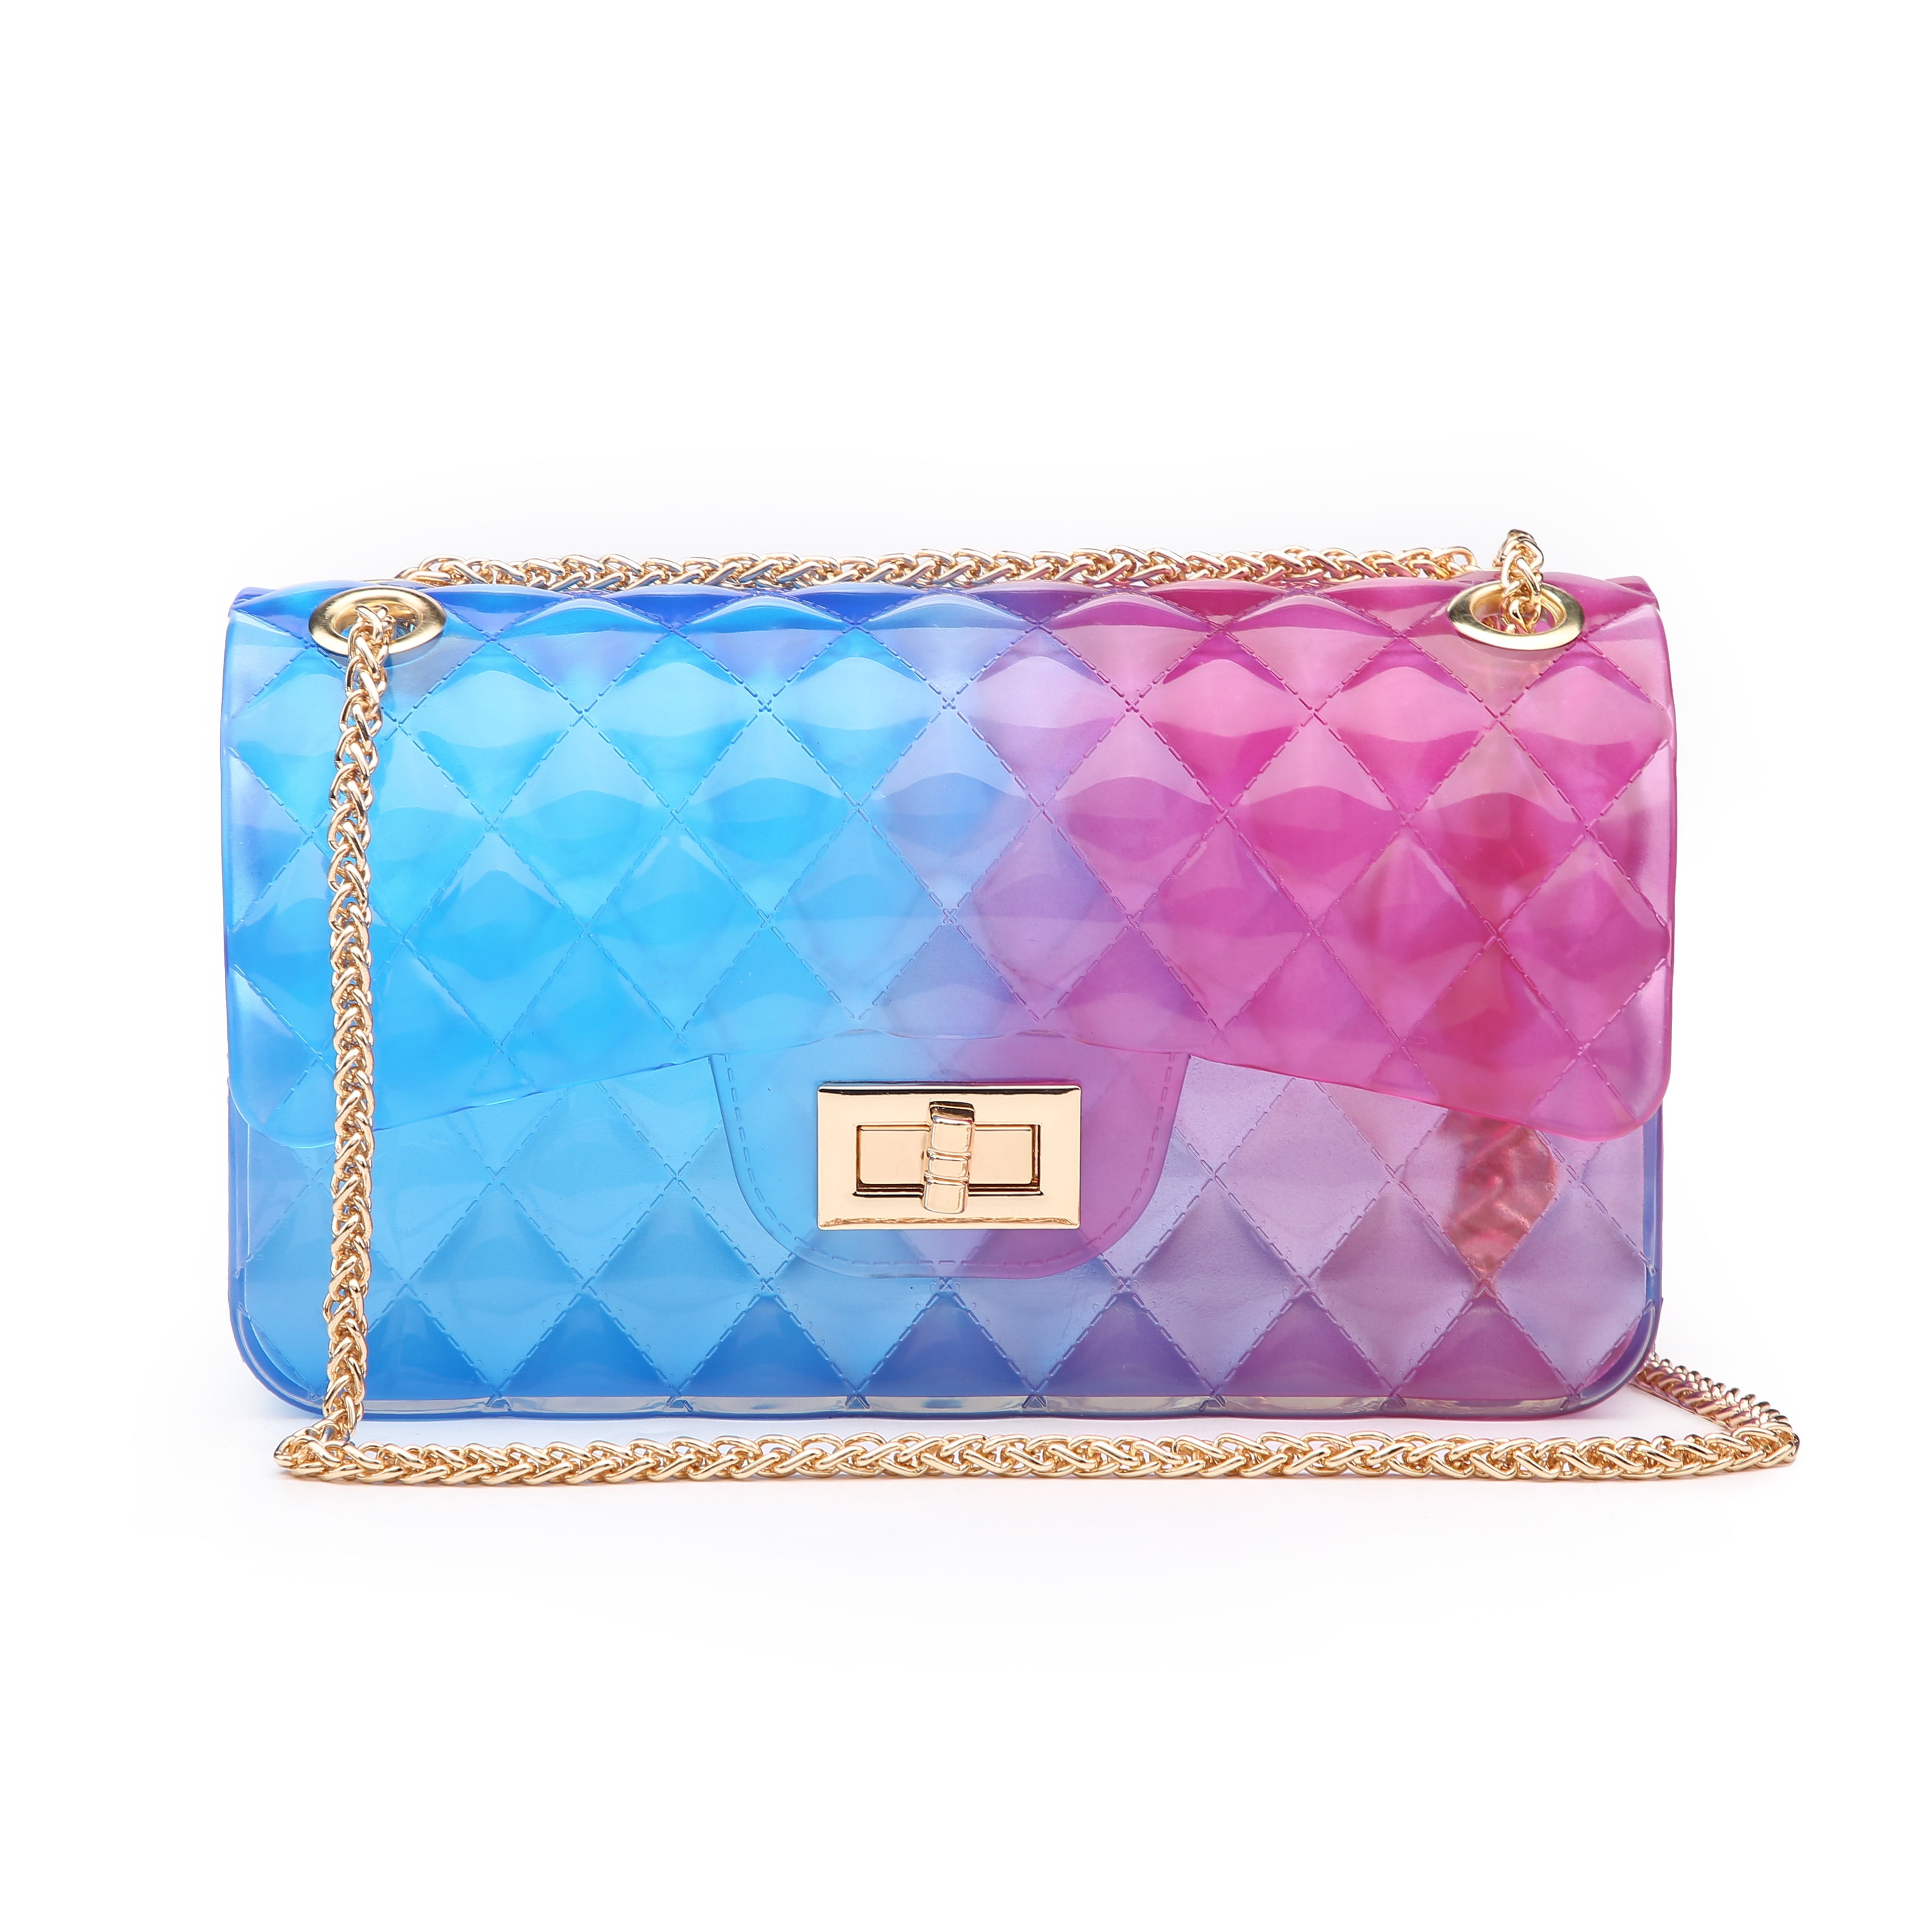 Poppy Fashion Women's Color Jelly Bag Transparent PVC Handbag Crossbody Shoulder with Metal Chain Strap-Blue/Fuchsia(Large Size) Walmart.com